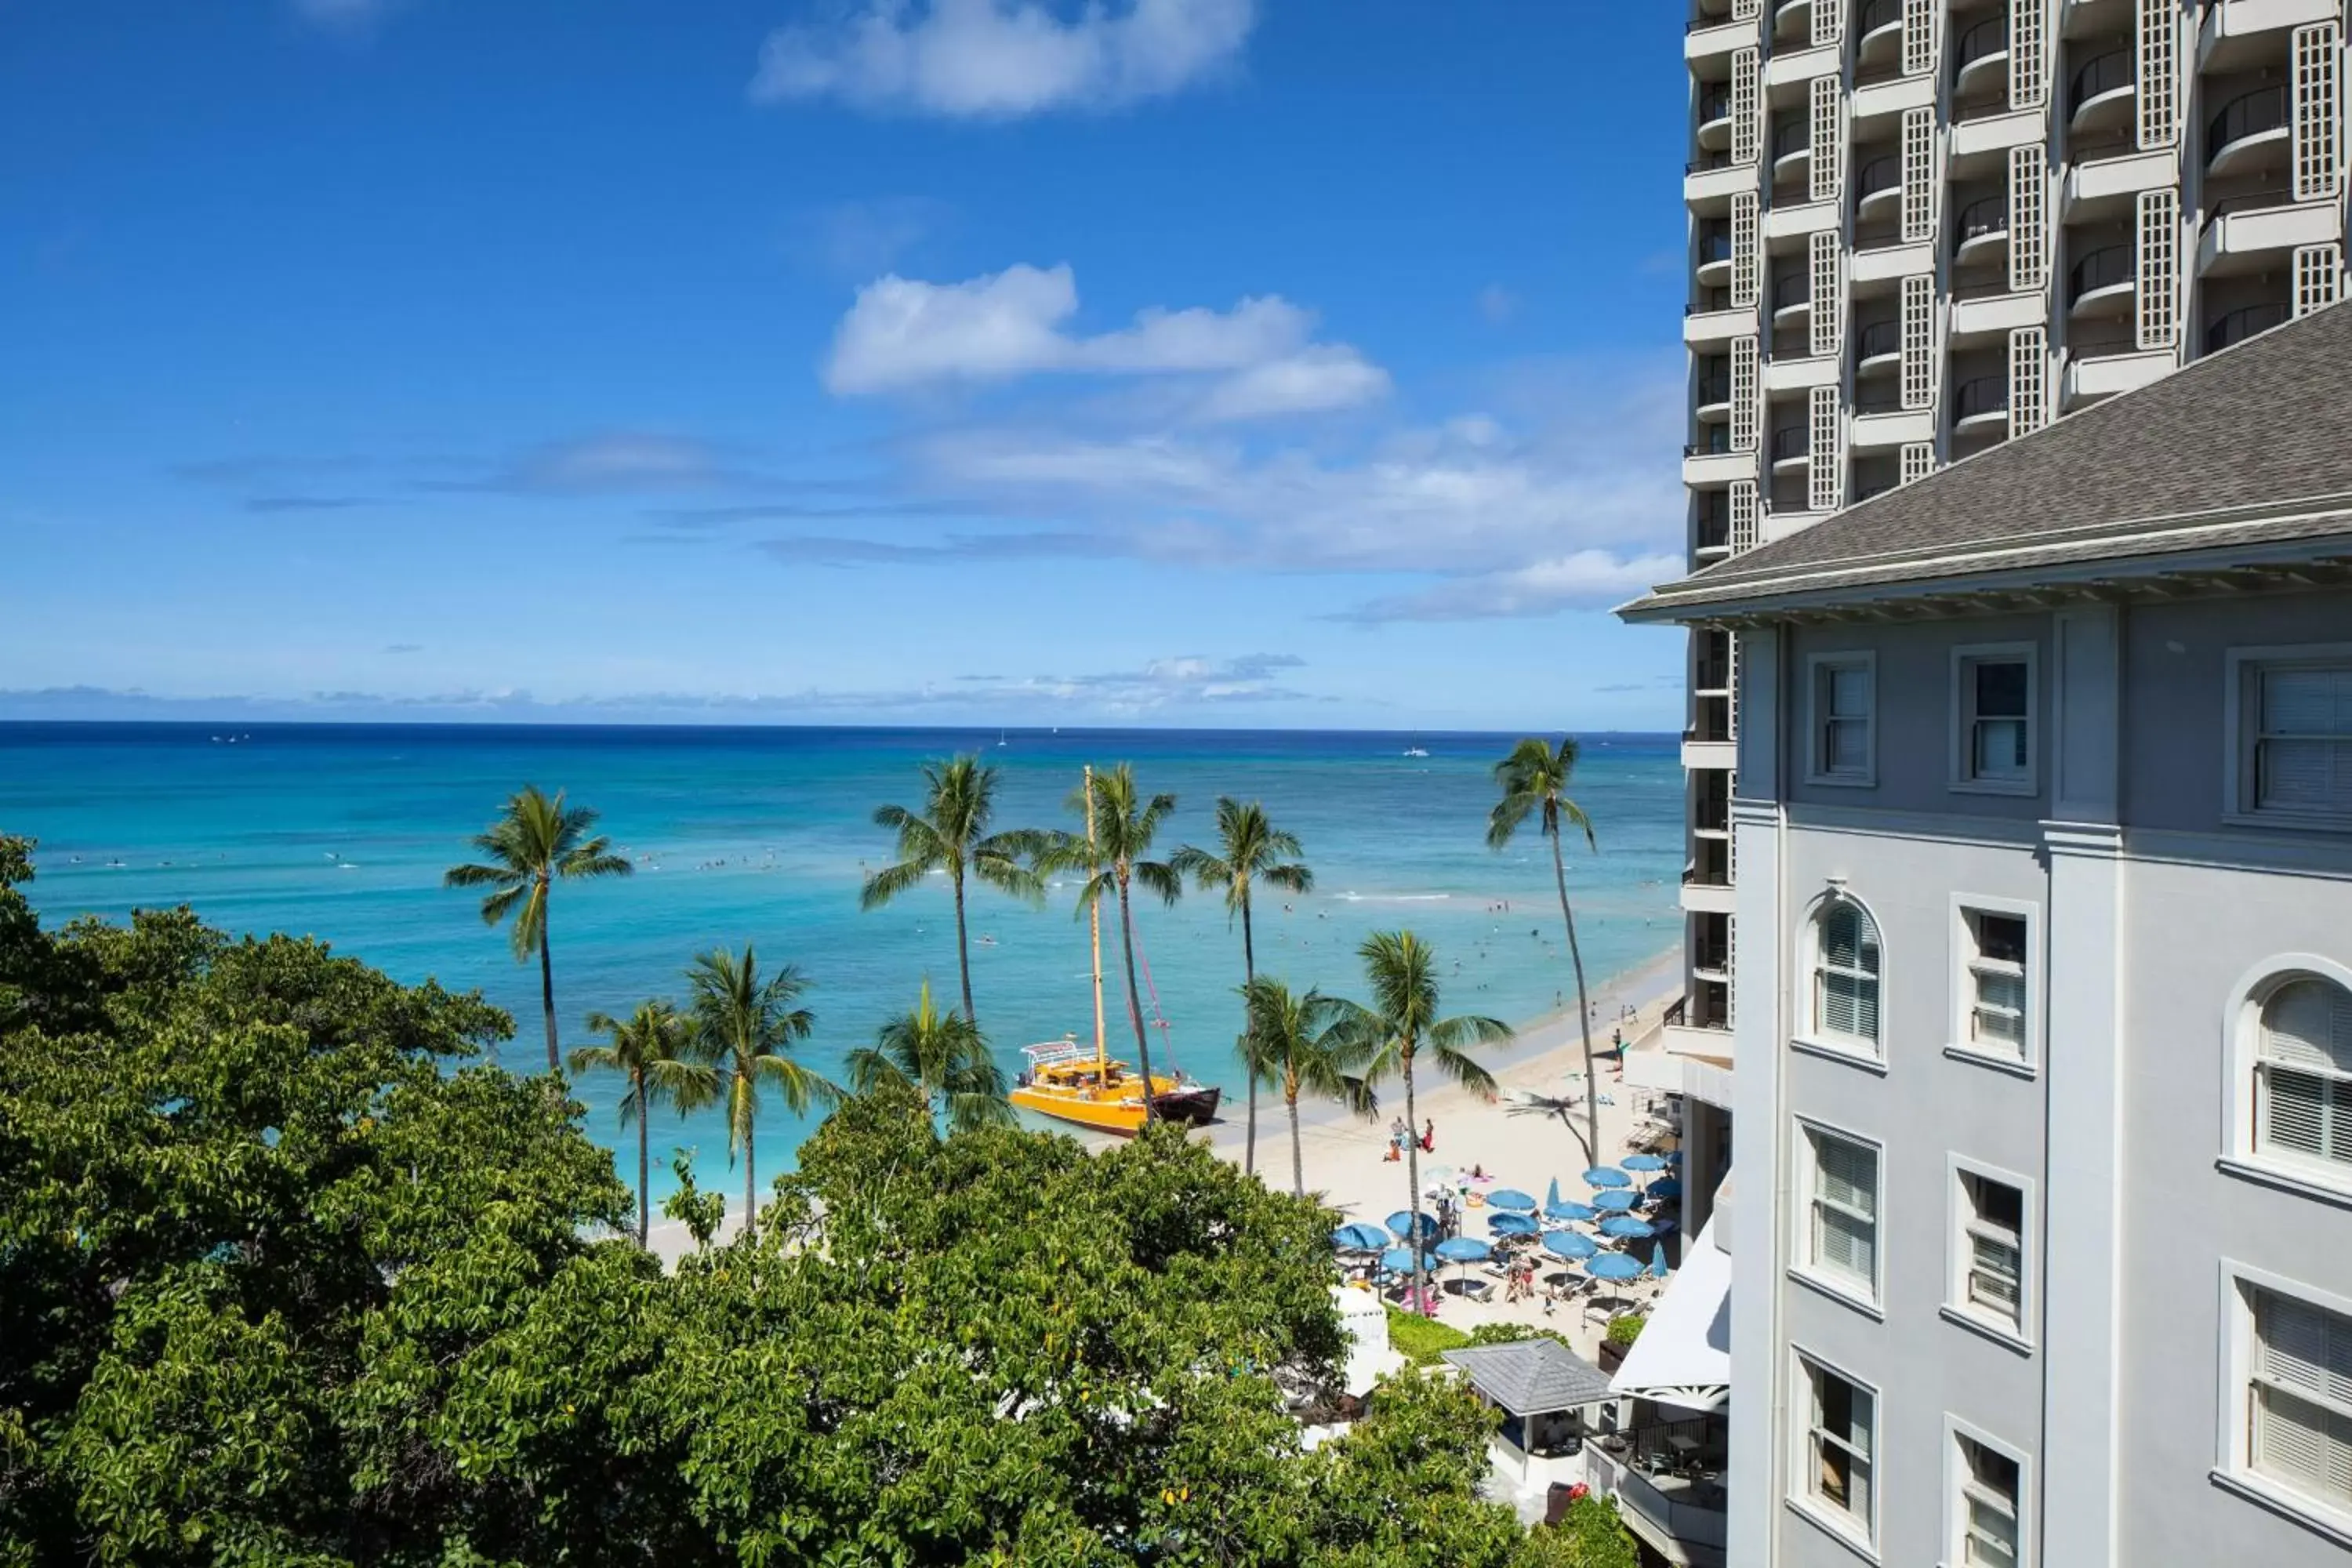 Meeting/conference room, Sea View in Moana Surfrider, A Westin Resort & Spa, Waikiki Beach